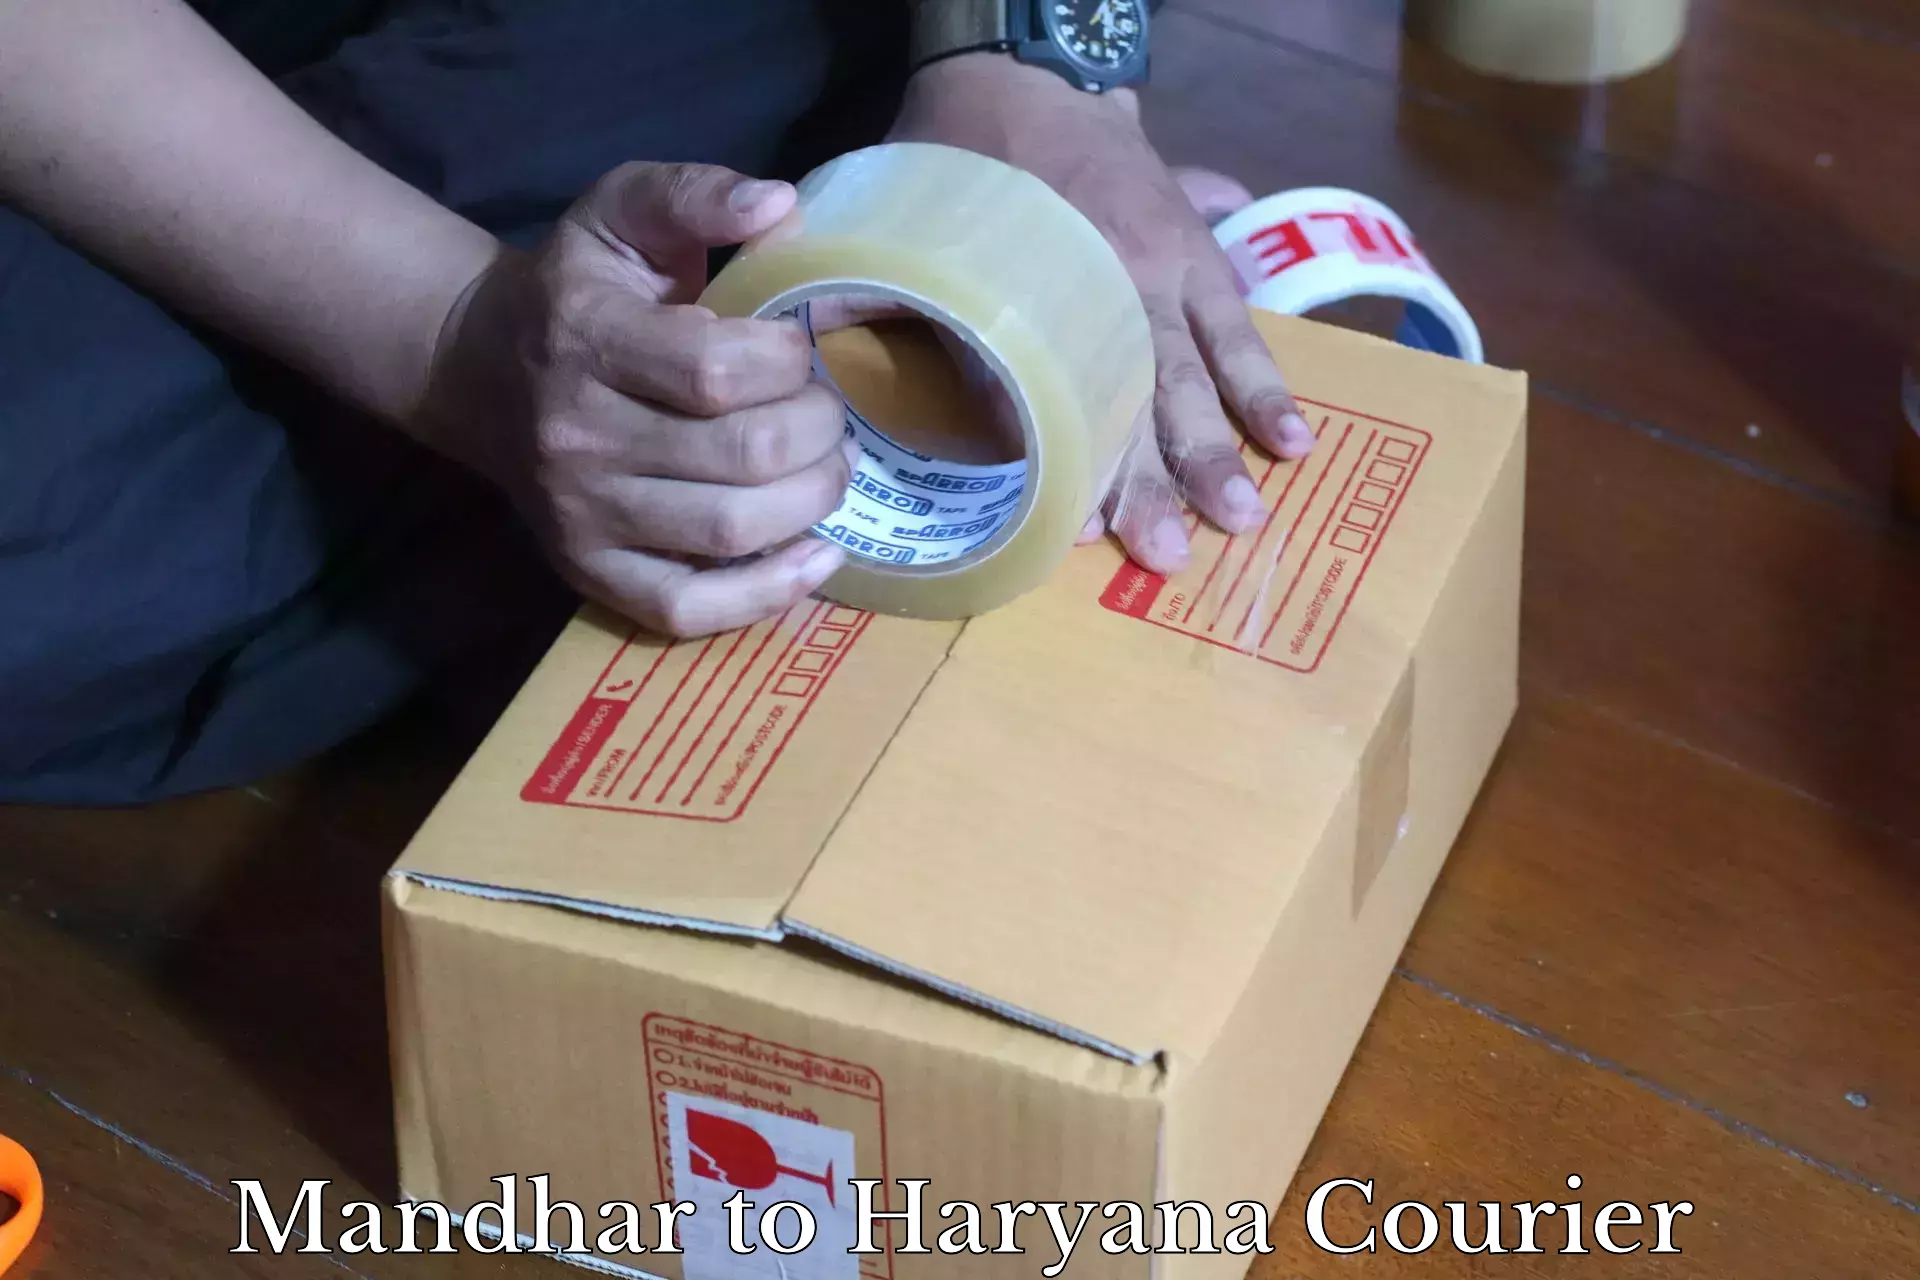 Custom courier packaging Mandhar to Gurgaon